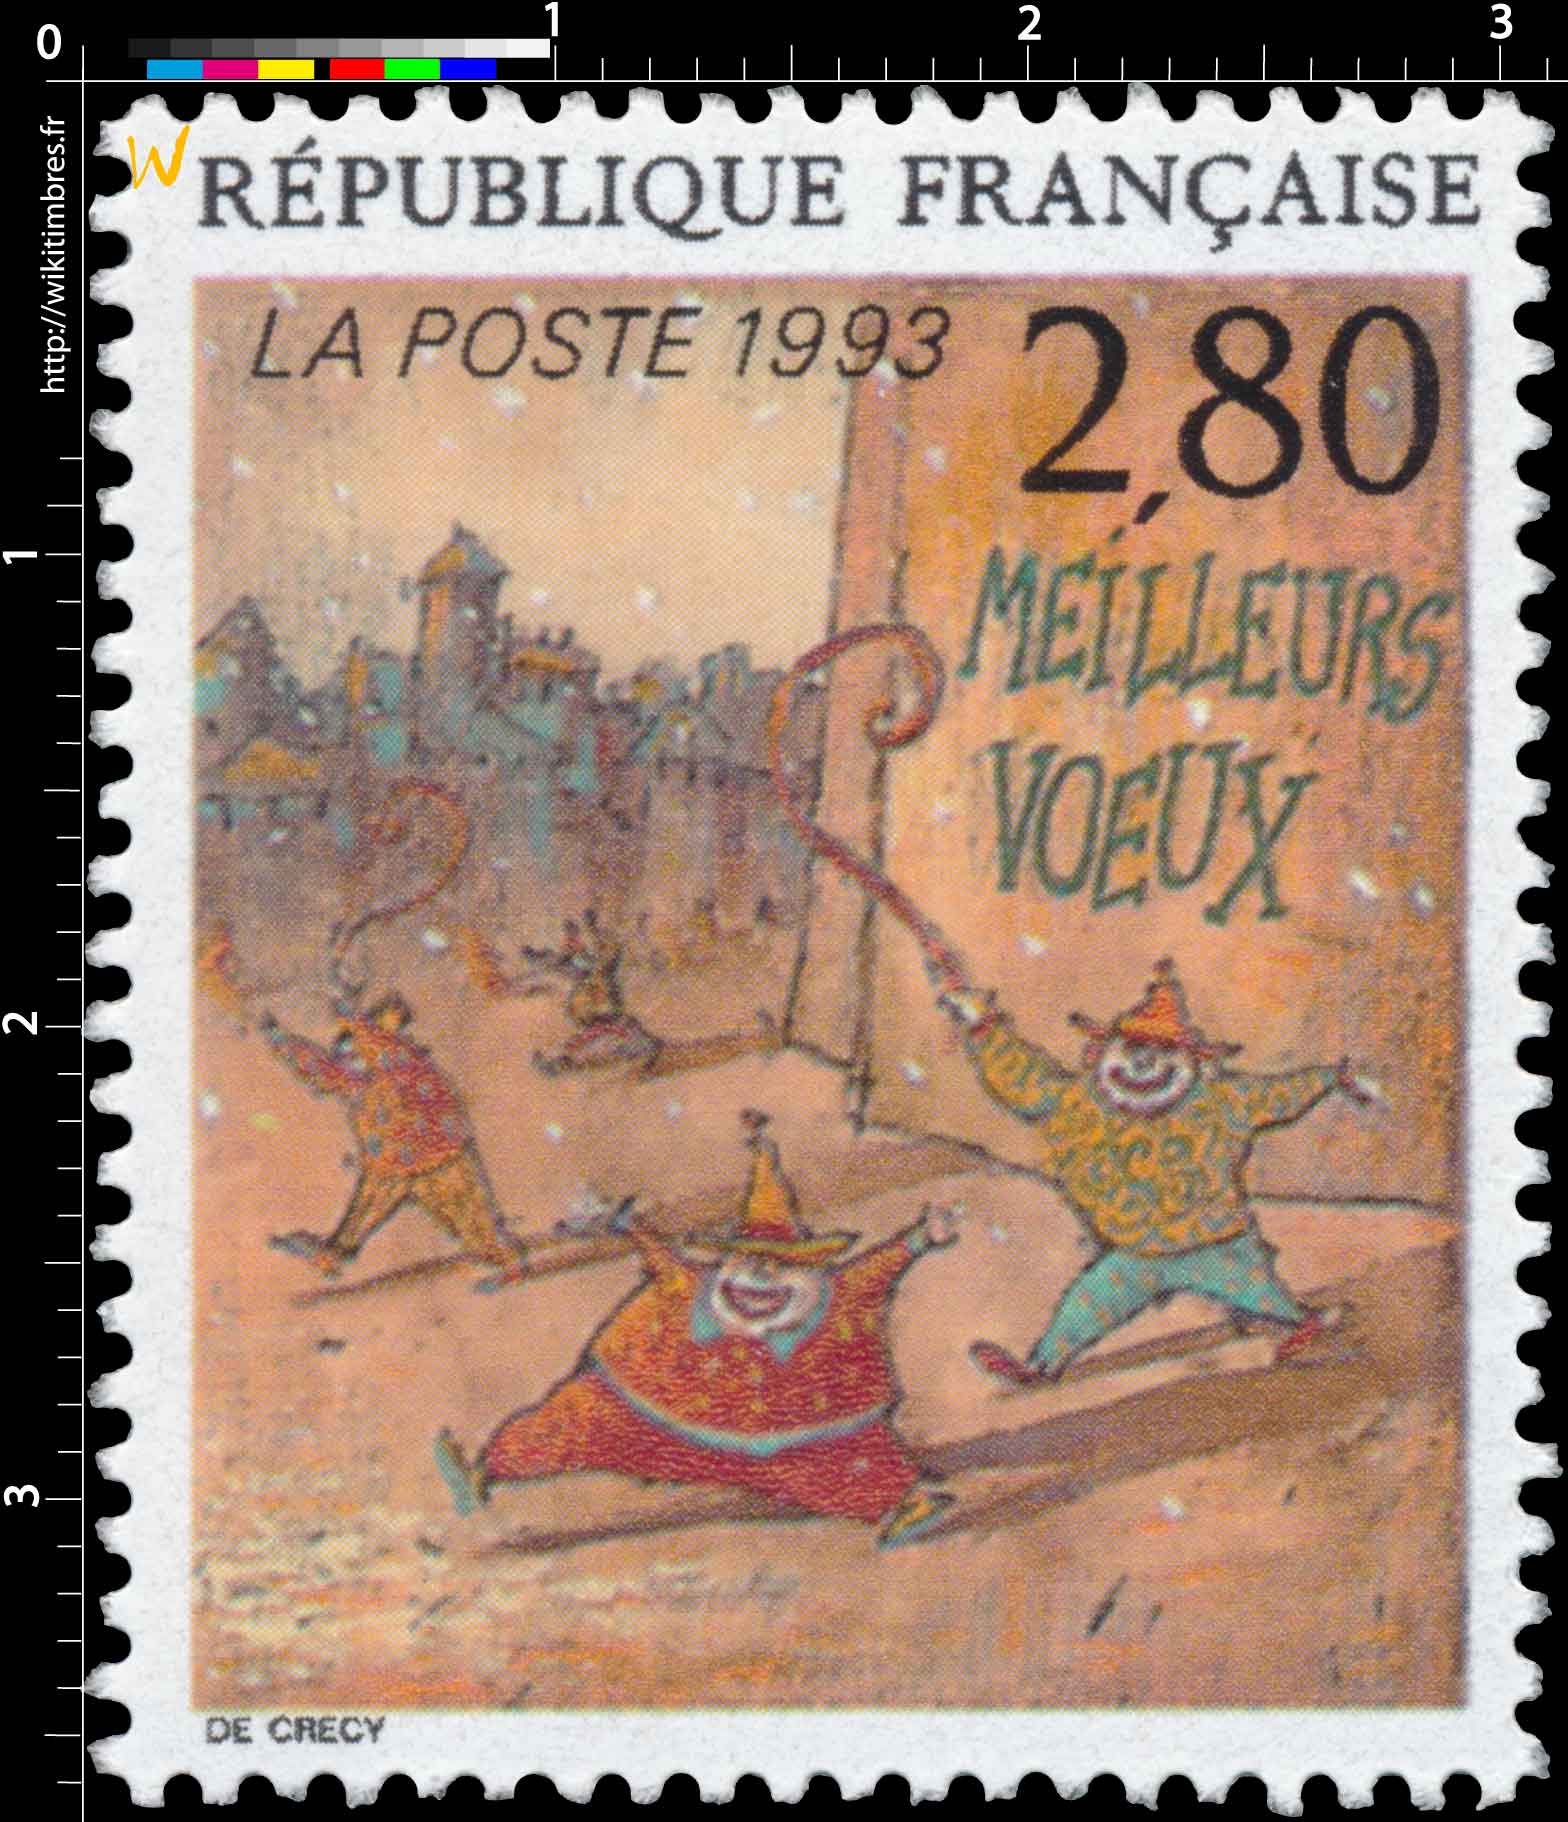 1993 MEILLEURS VŒUX